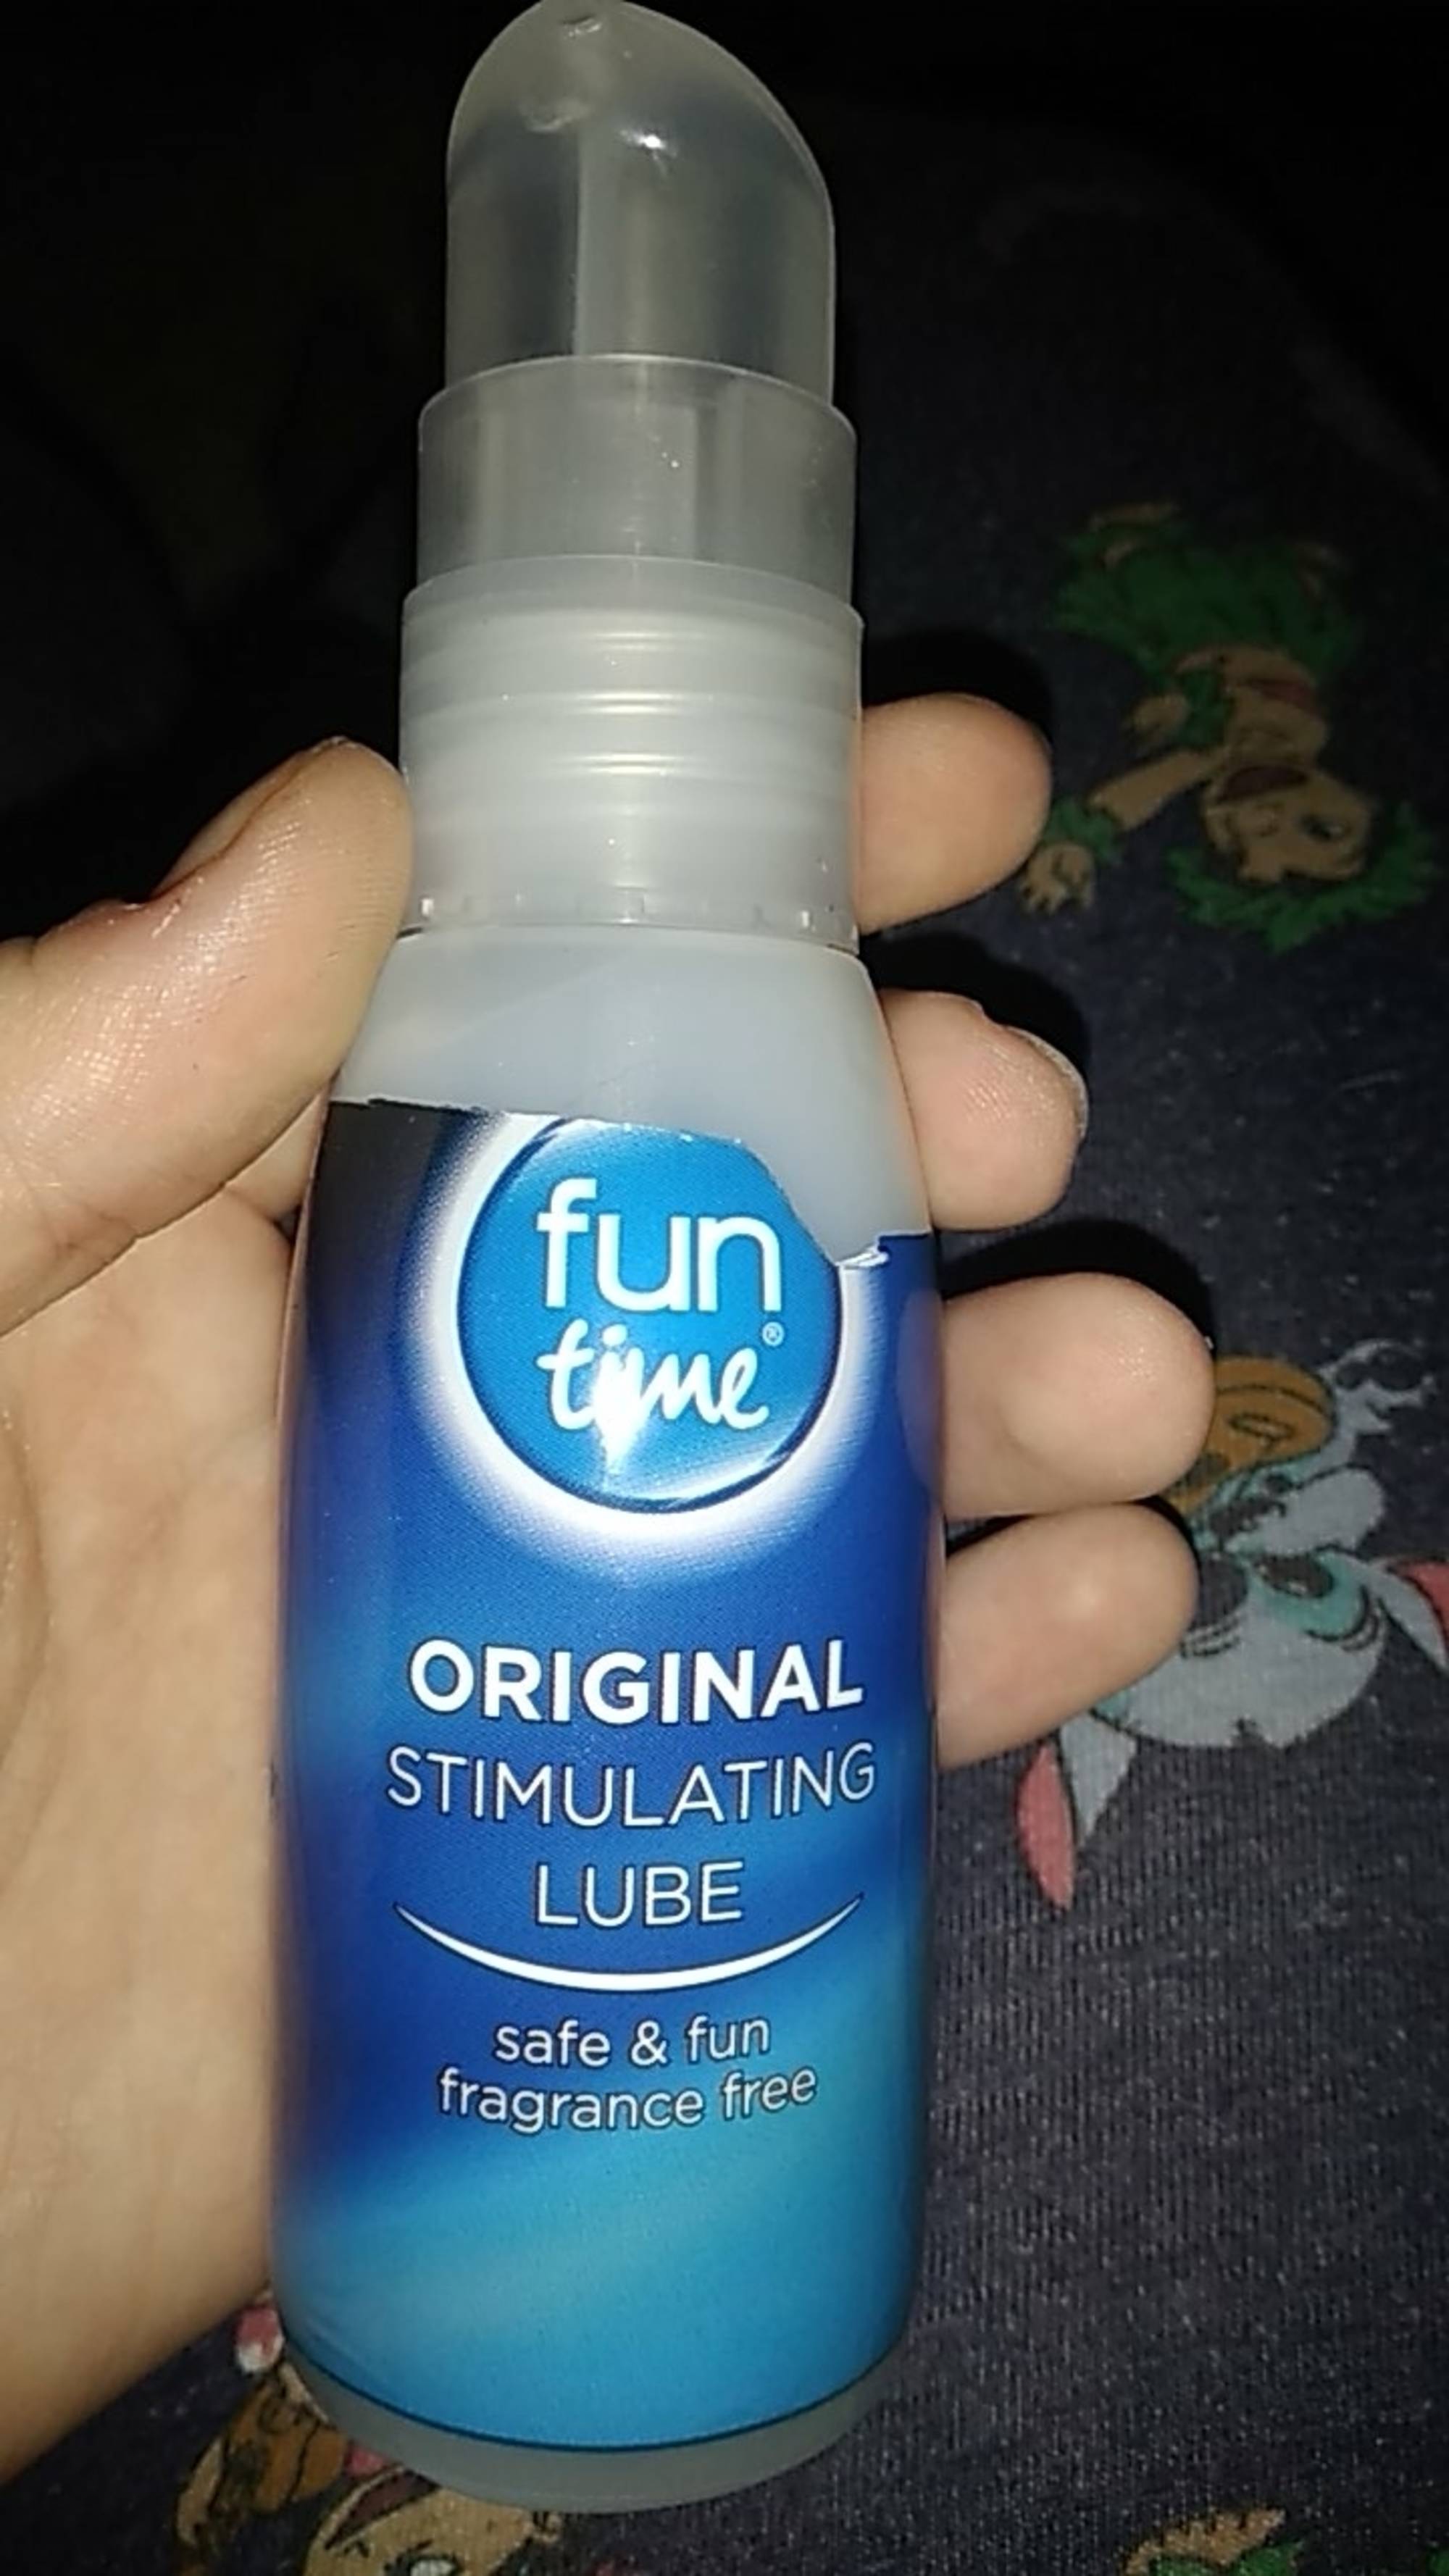 FUN TIME - Original stimulating lube